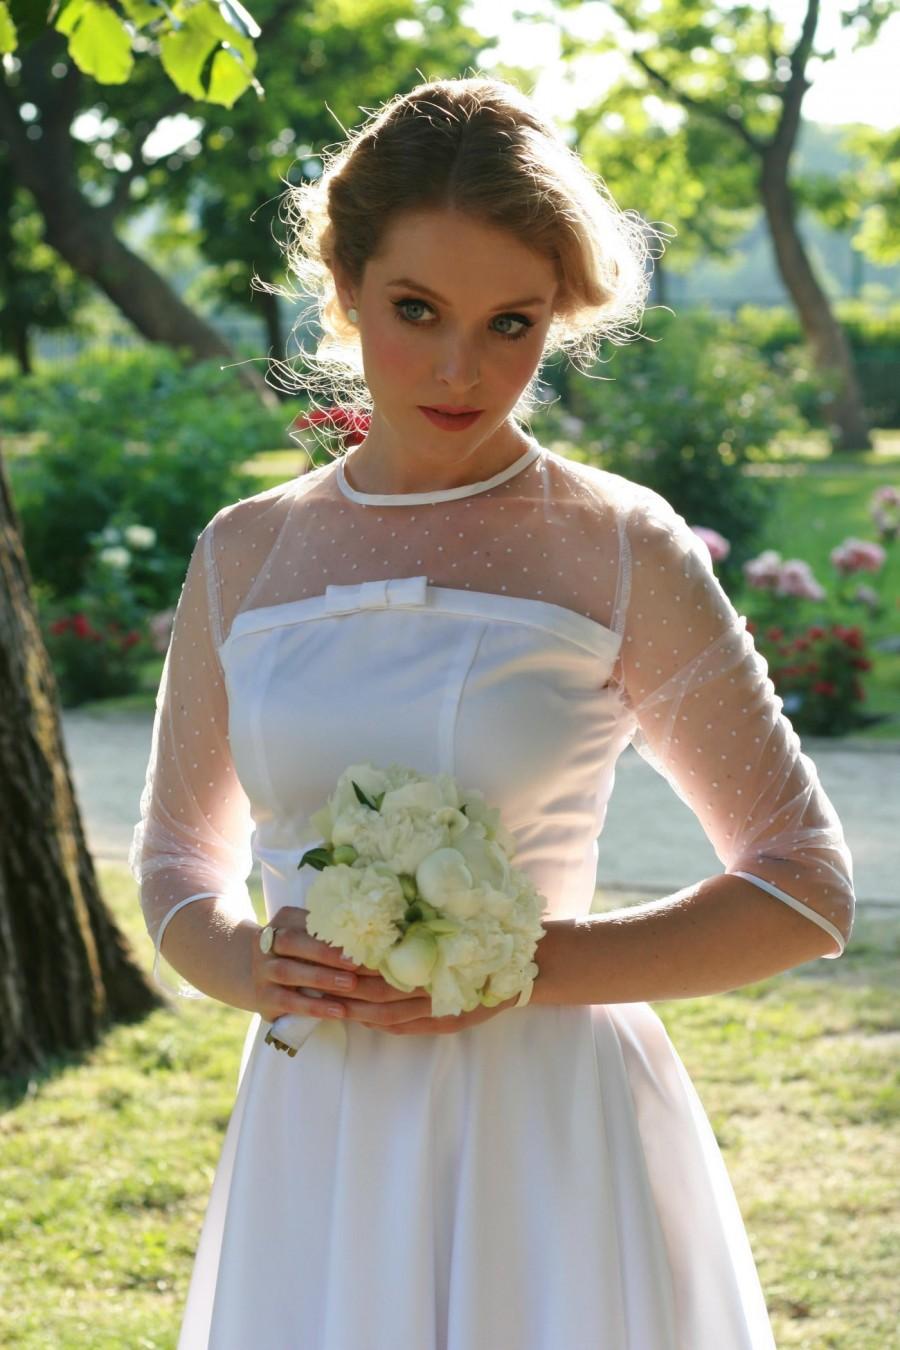 زفاف - Lana Wedding Dress: vintage style / pin-up / rockabilly bride dress by TiCCi Rockabilly Clothing